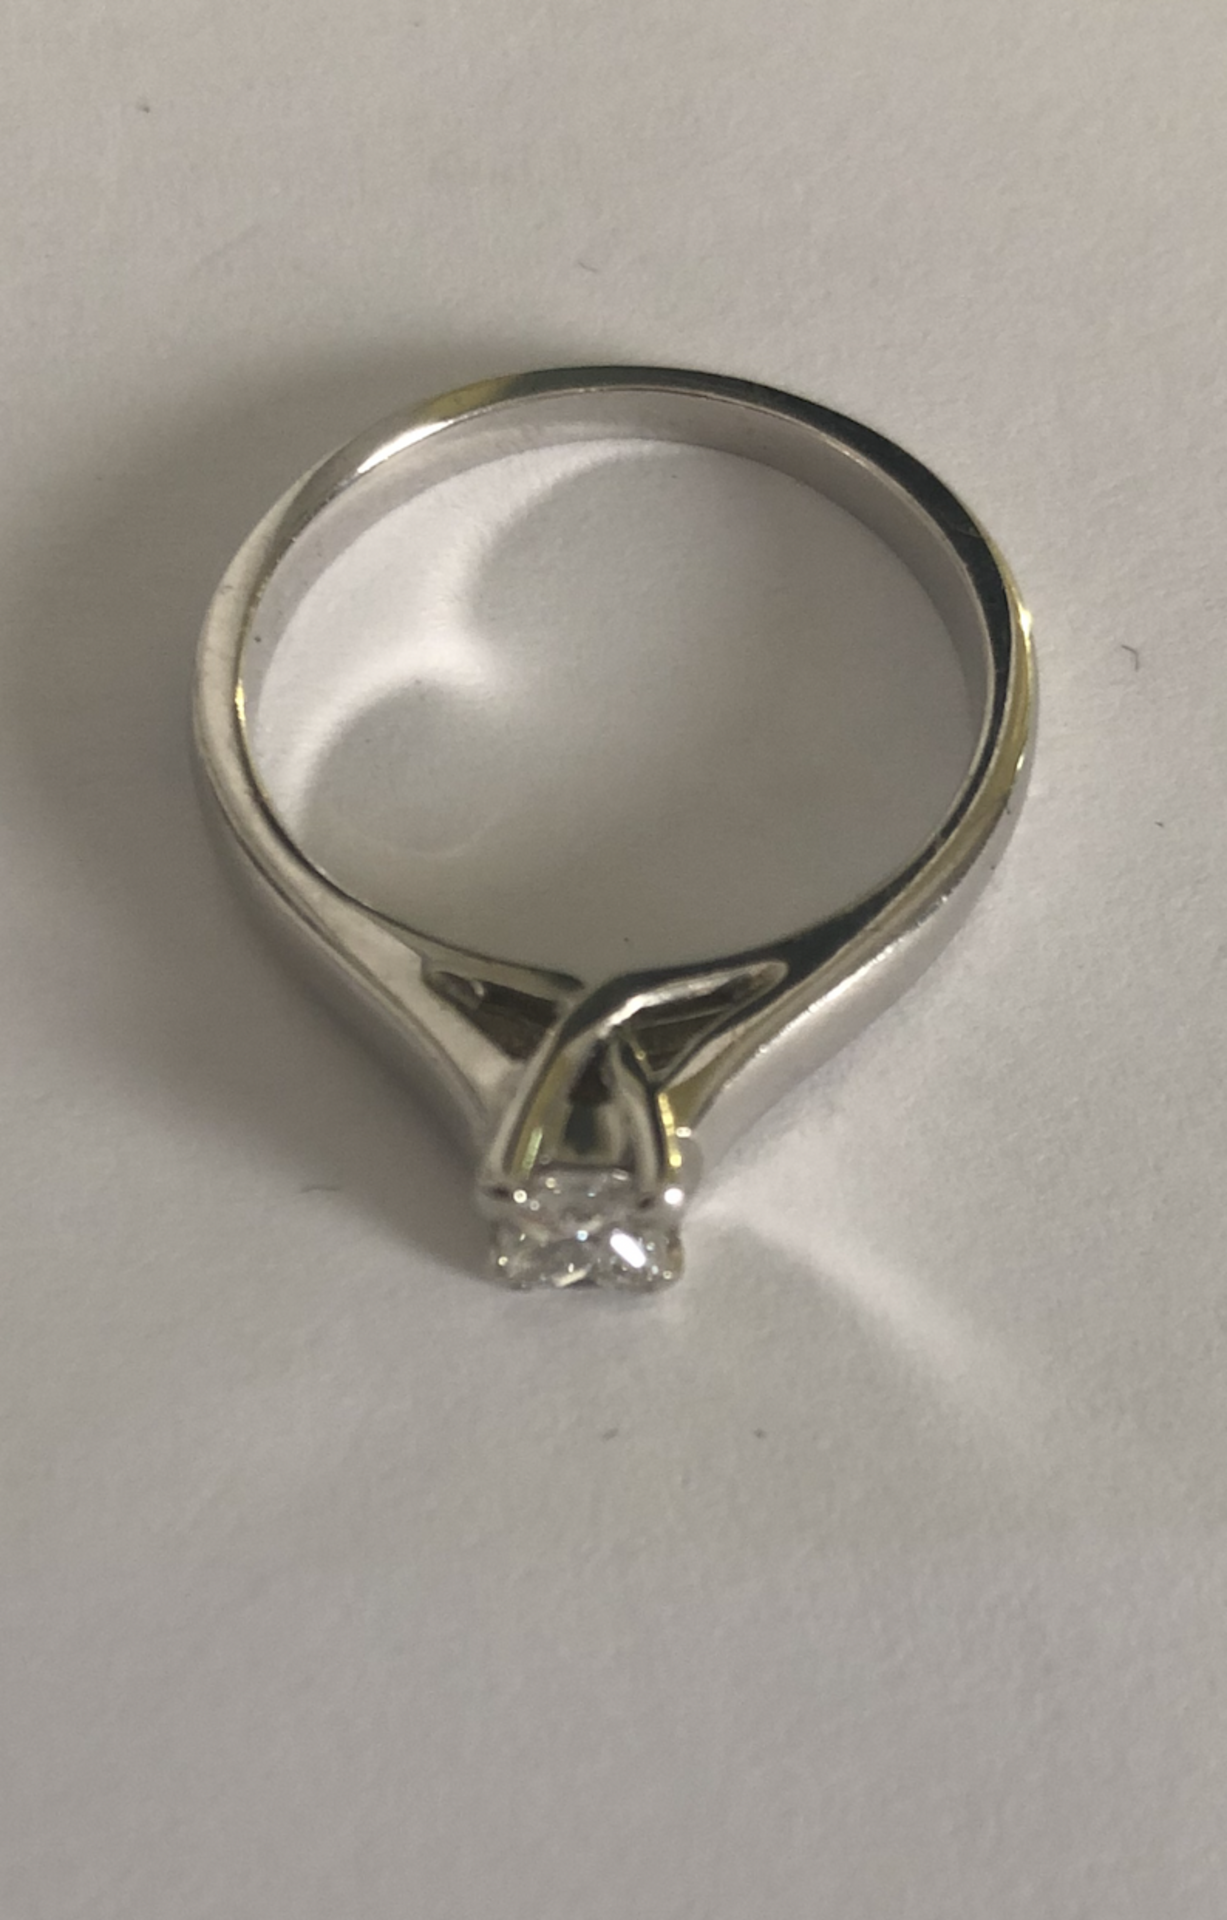 18 carat White Gold Ring with 0.4 carat Princess Cut Diamond - Image 4 of 4